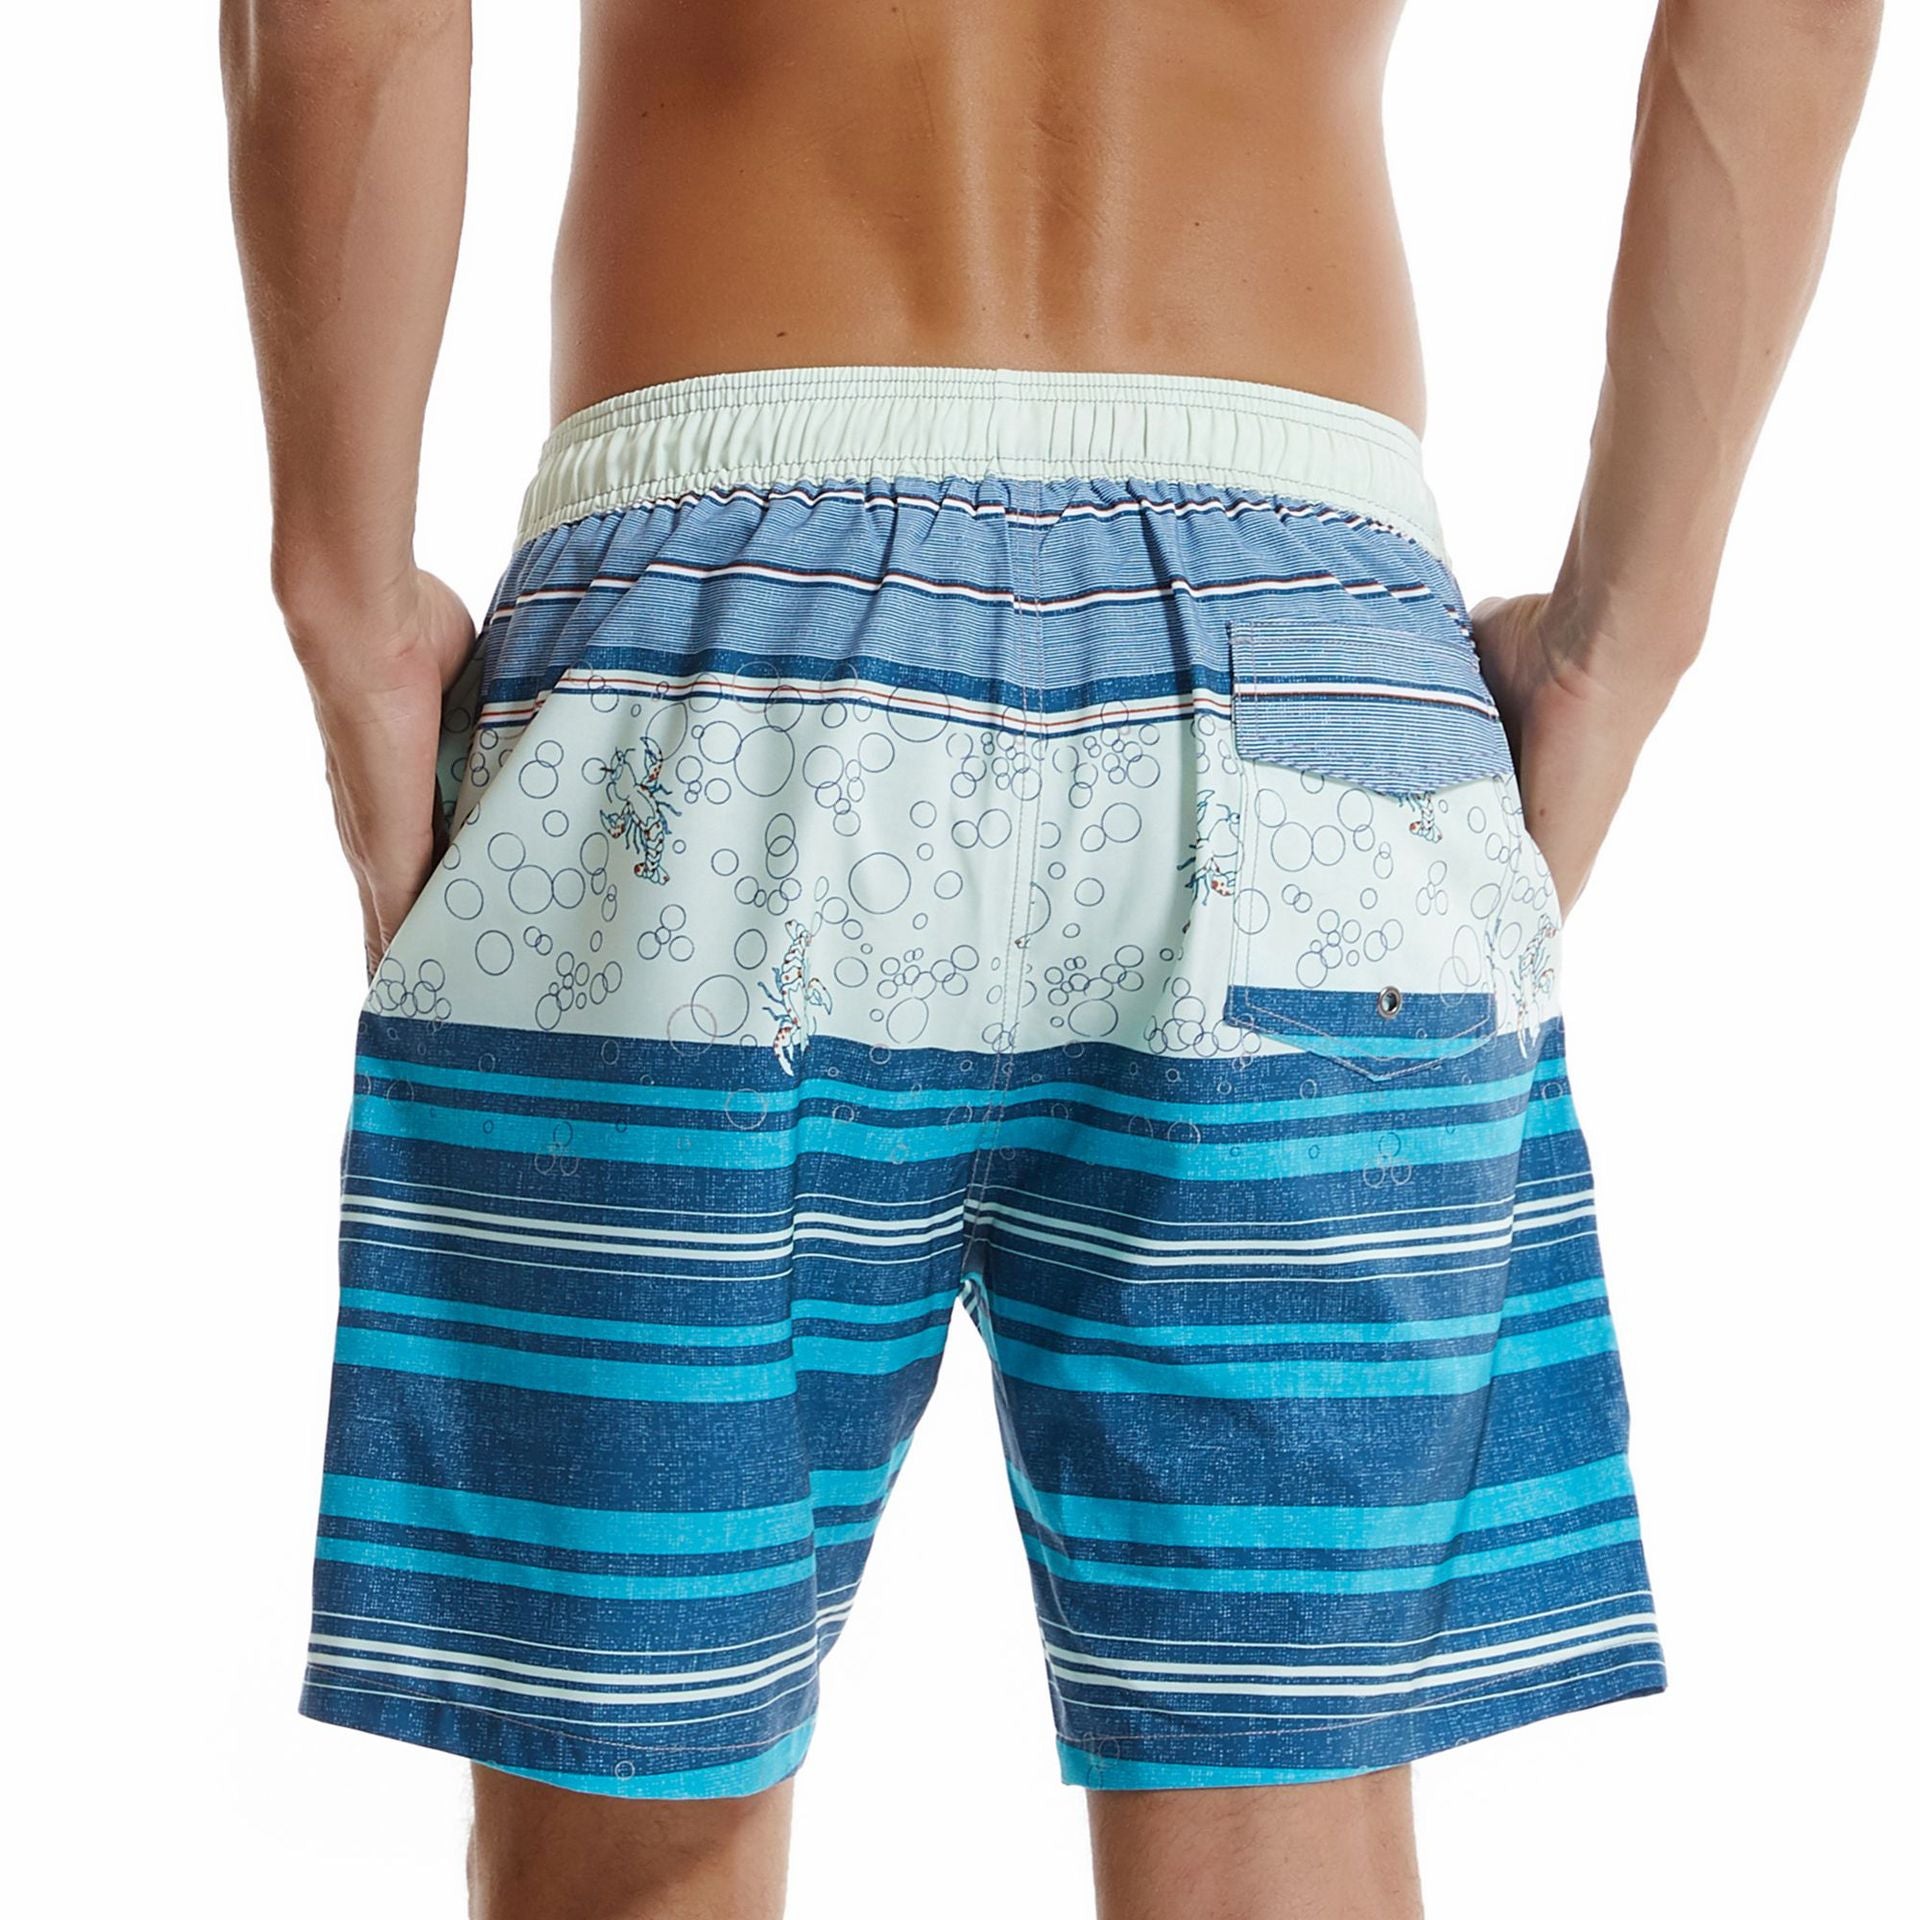 Men's Swim Trunks with Compression Liner Quick Dry 7" Inseam Swimsuit Swimwear - Crayfish Stripe